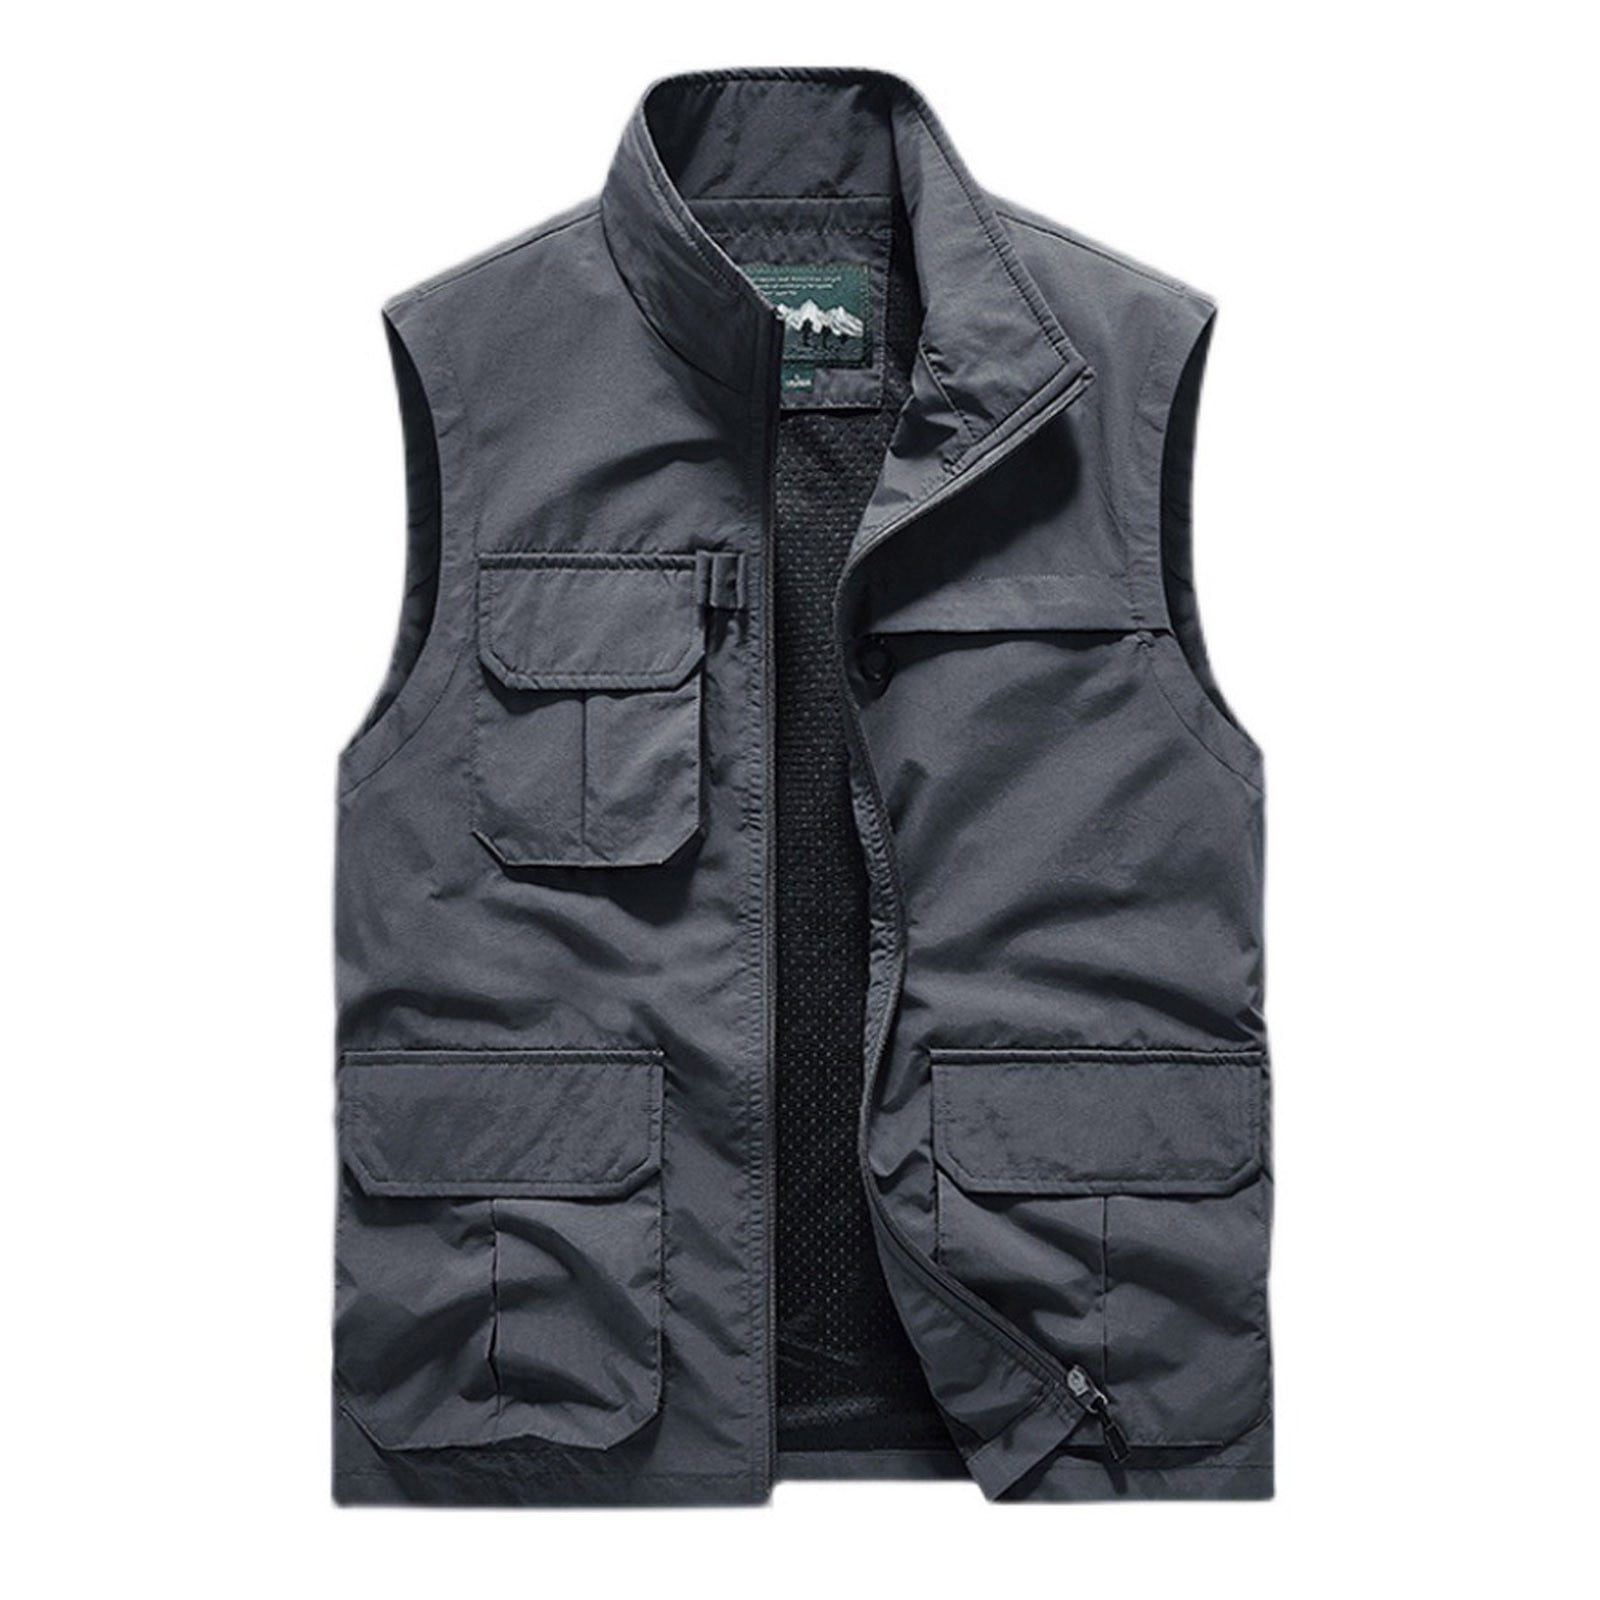 Honeeladyy Men's Outdoor Work Vest Fishing Travel Photo Cargo Vest Jacket with Multi Pockets Black Xxxxl, Size: 14(4XL)